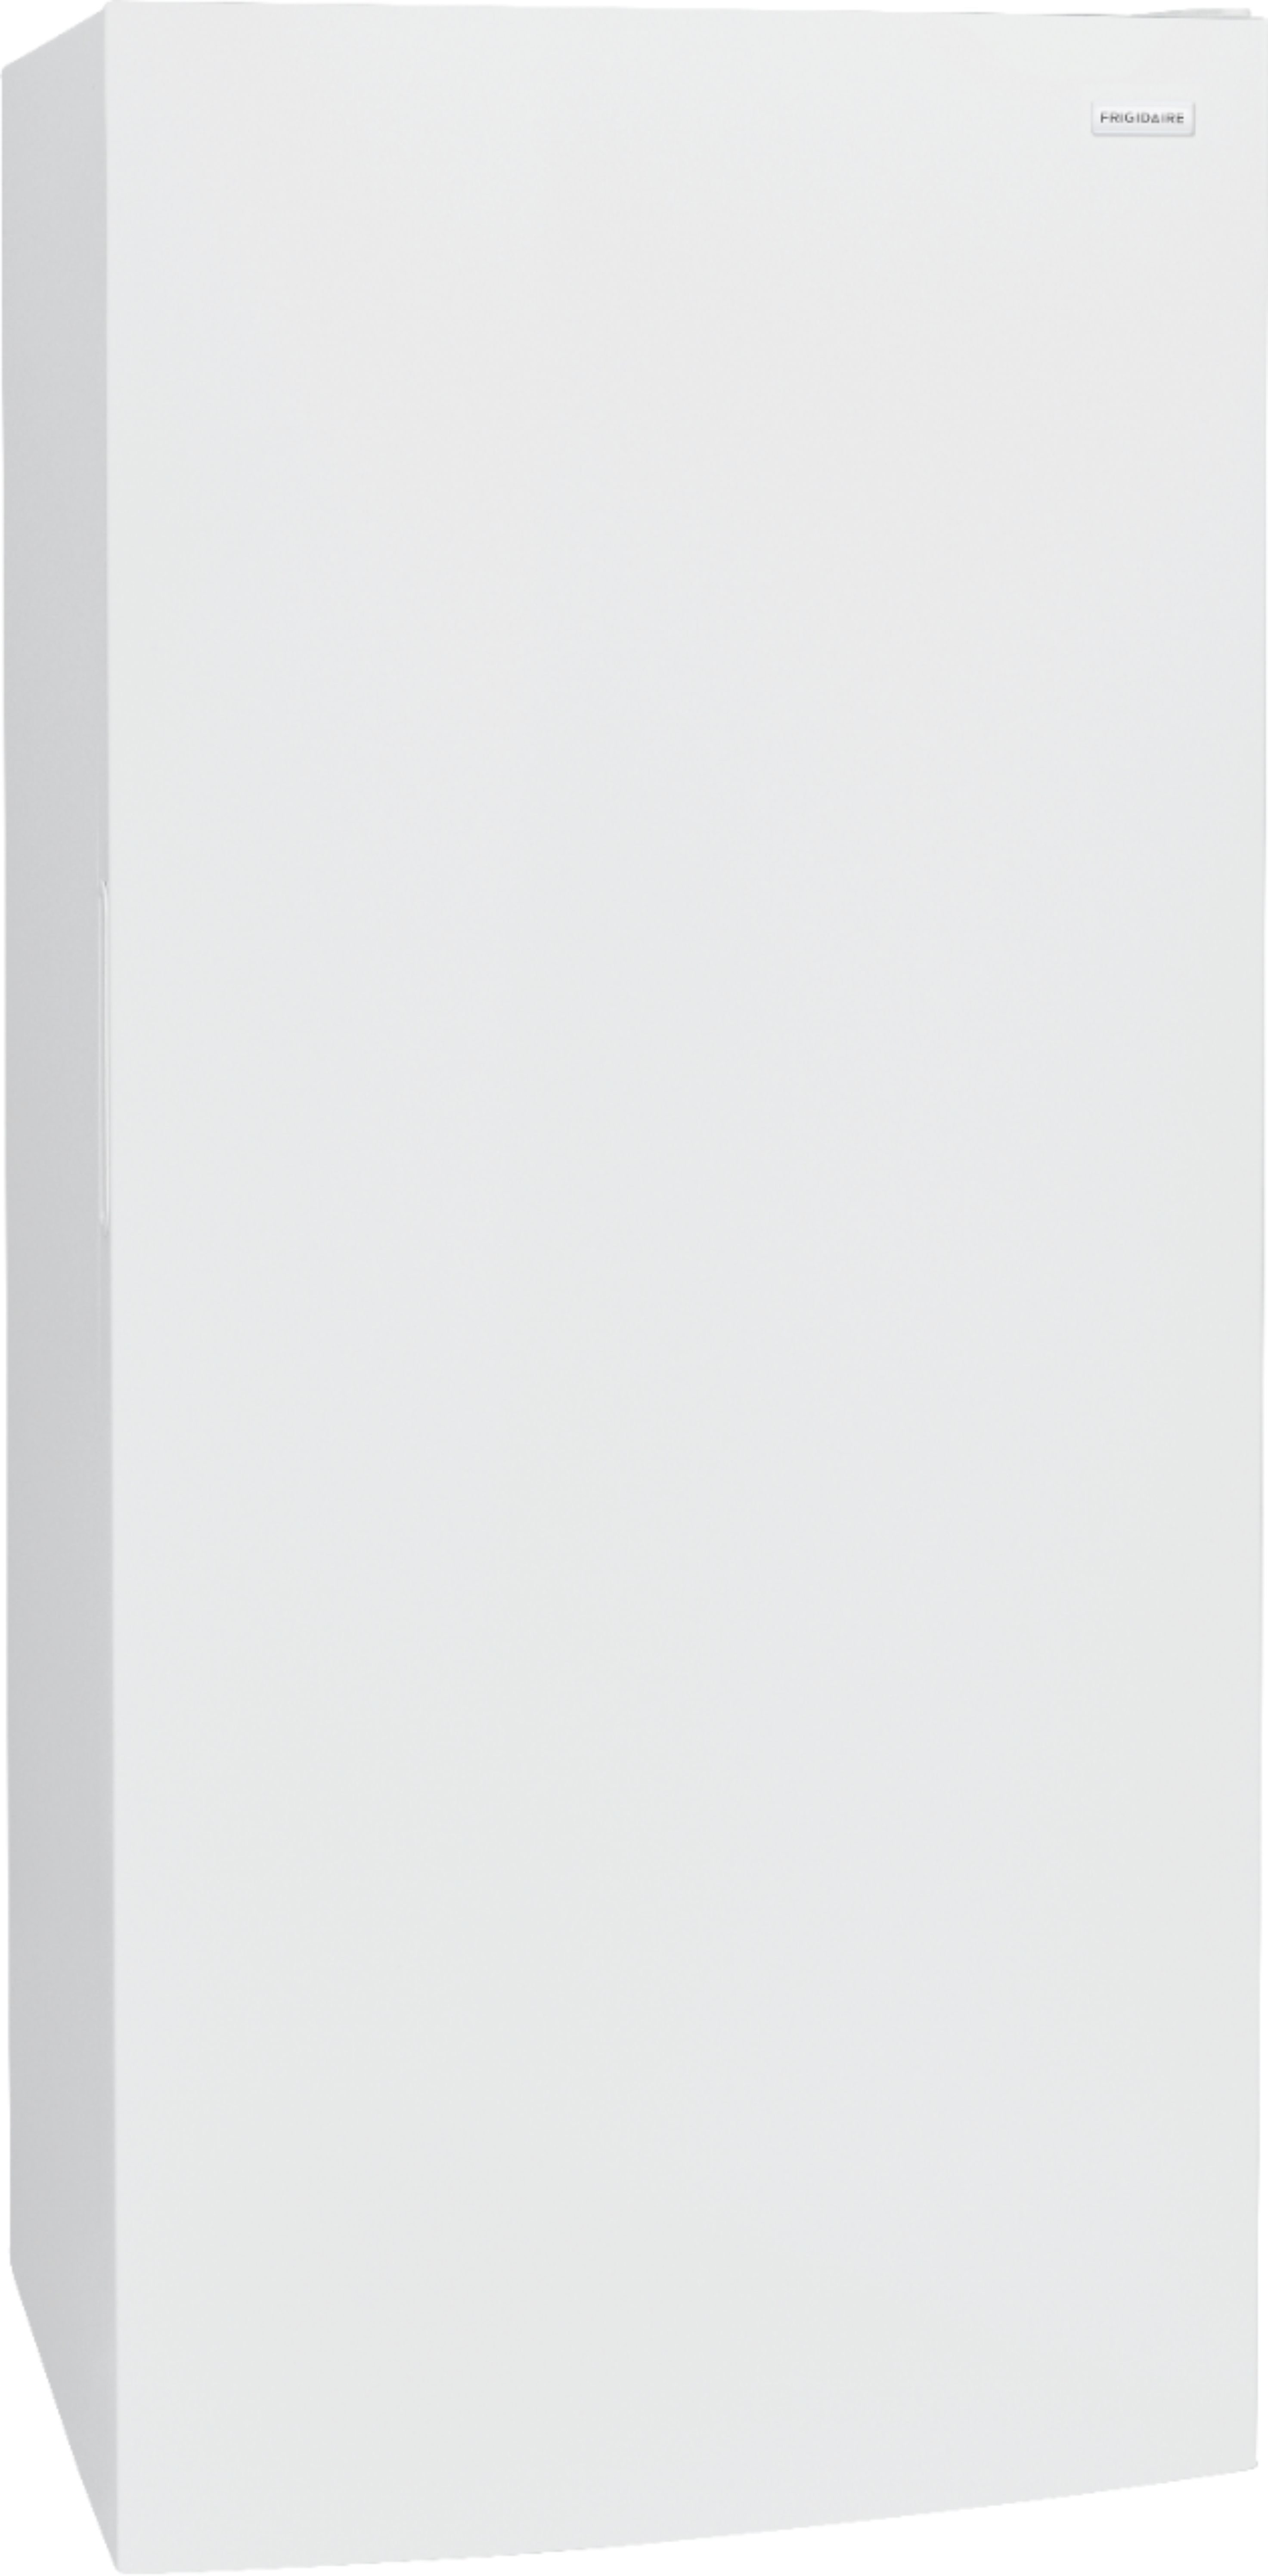 Angle View: Frigidaire - 20.0 Cu. Ft. Upright Freezer with Interior Light - White